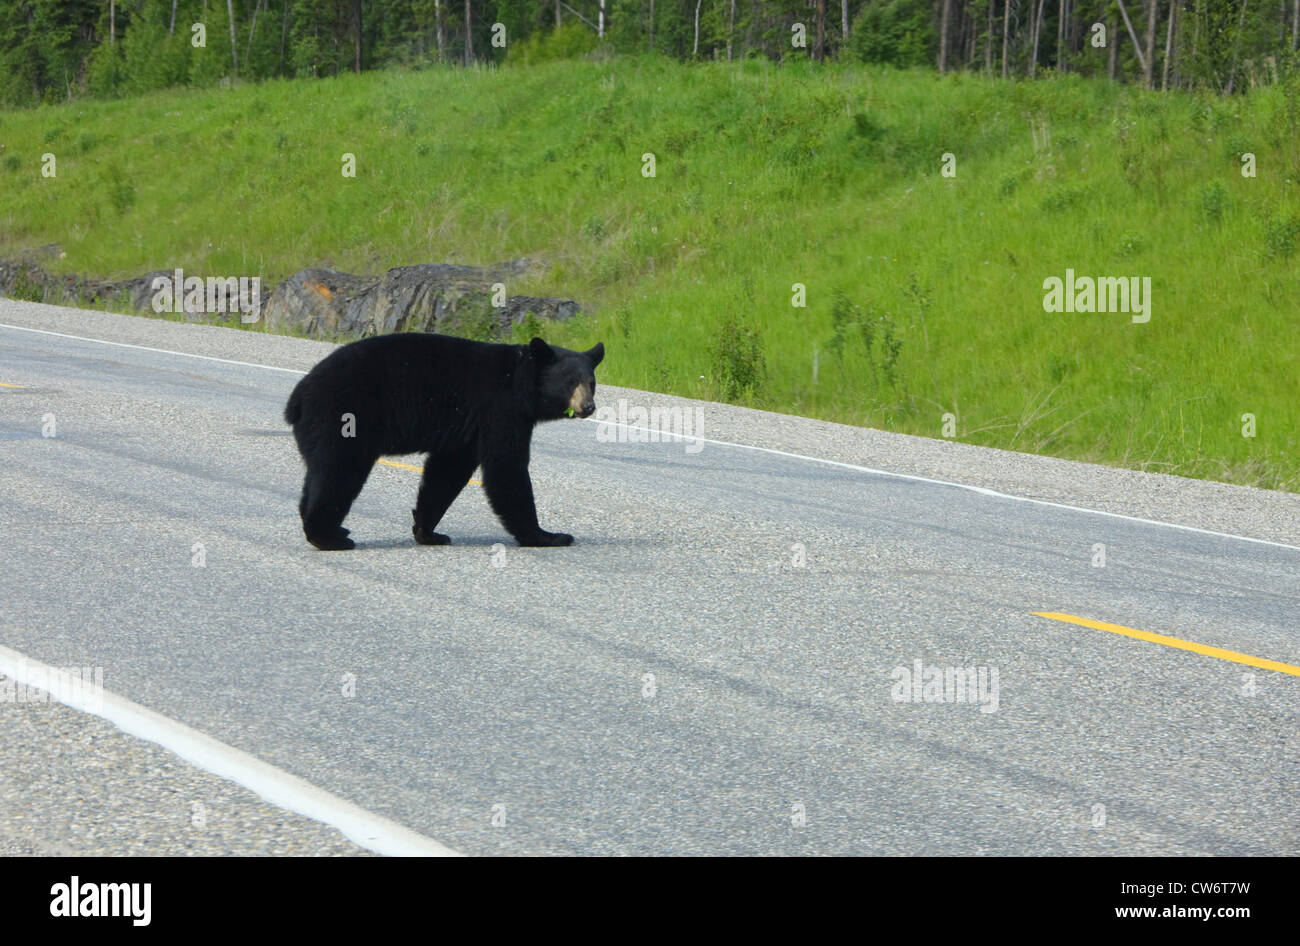 American black bear (Ursus americanus), on a road, Canada Stock Photo